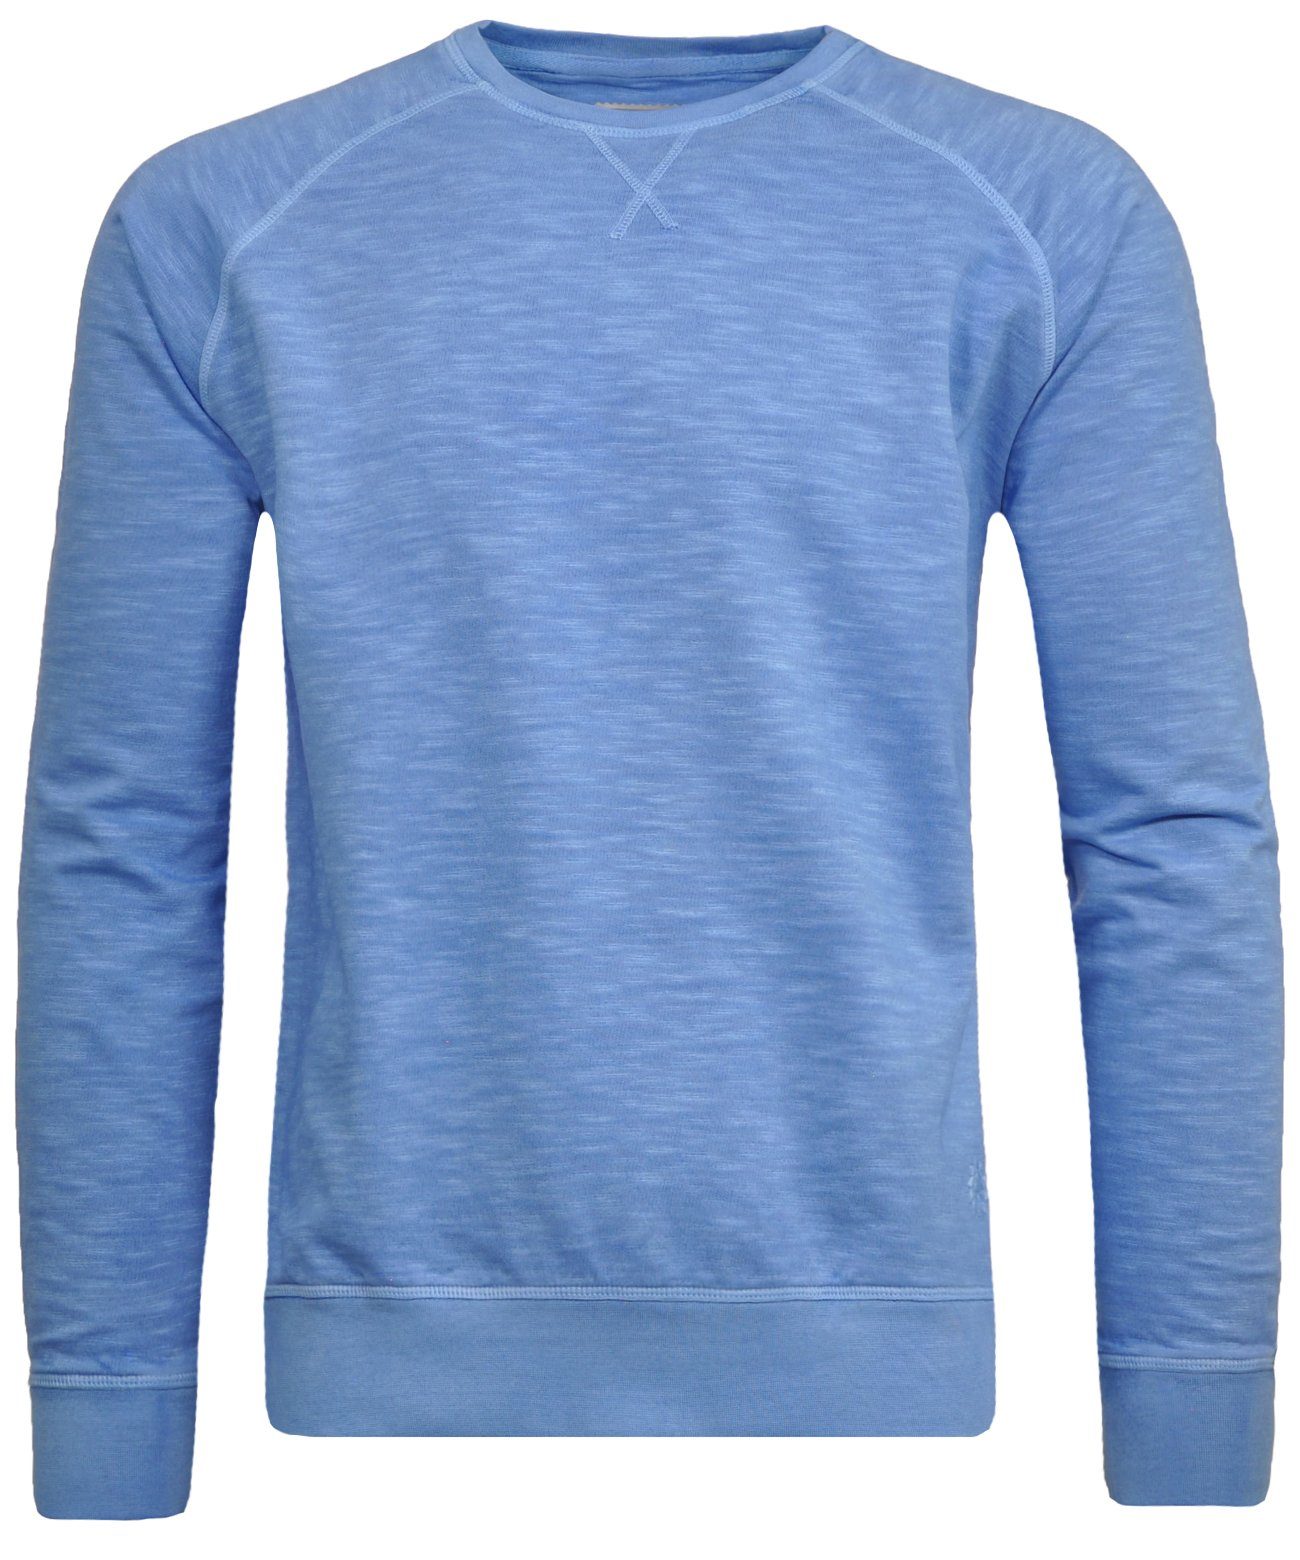 RAGMAN Hellblau-774 Sweatshirt